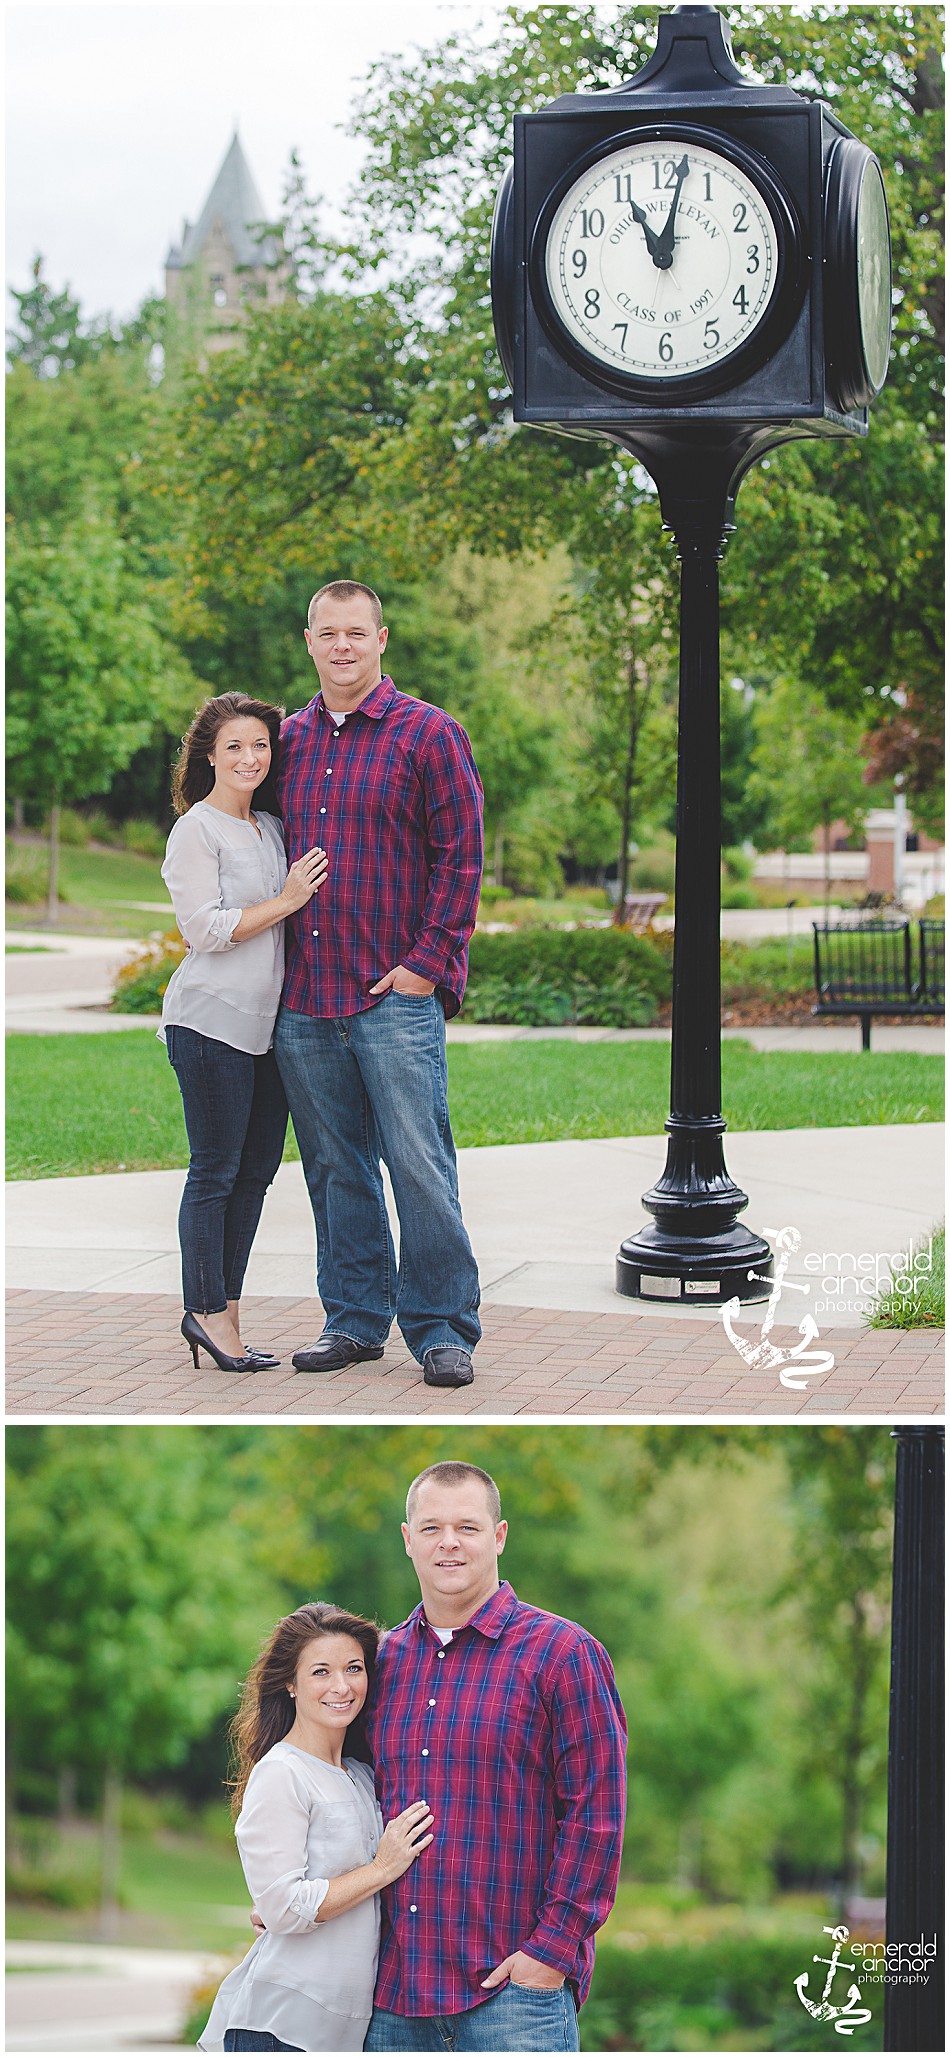 [Delaware, Ohio Photography] [Family Photography] [Couples Photography] [Pet Photography] [Emerald Anchor Photography] [Mike + Caitlin]emeraldanchorphotogrpahy.com (6)